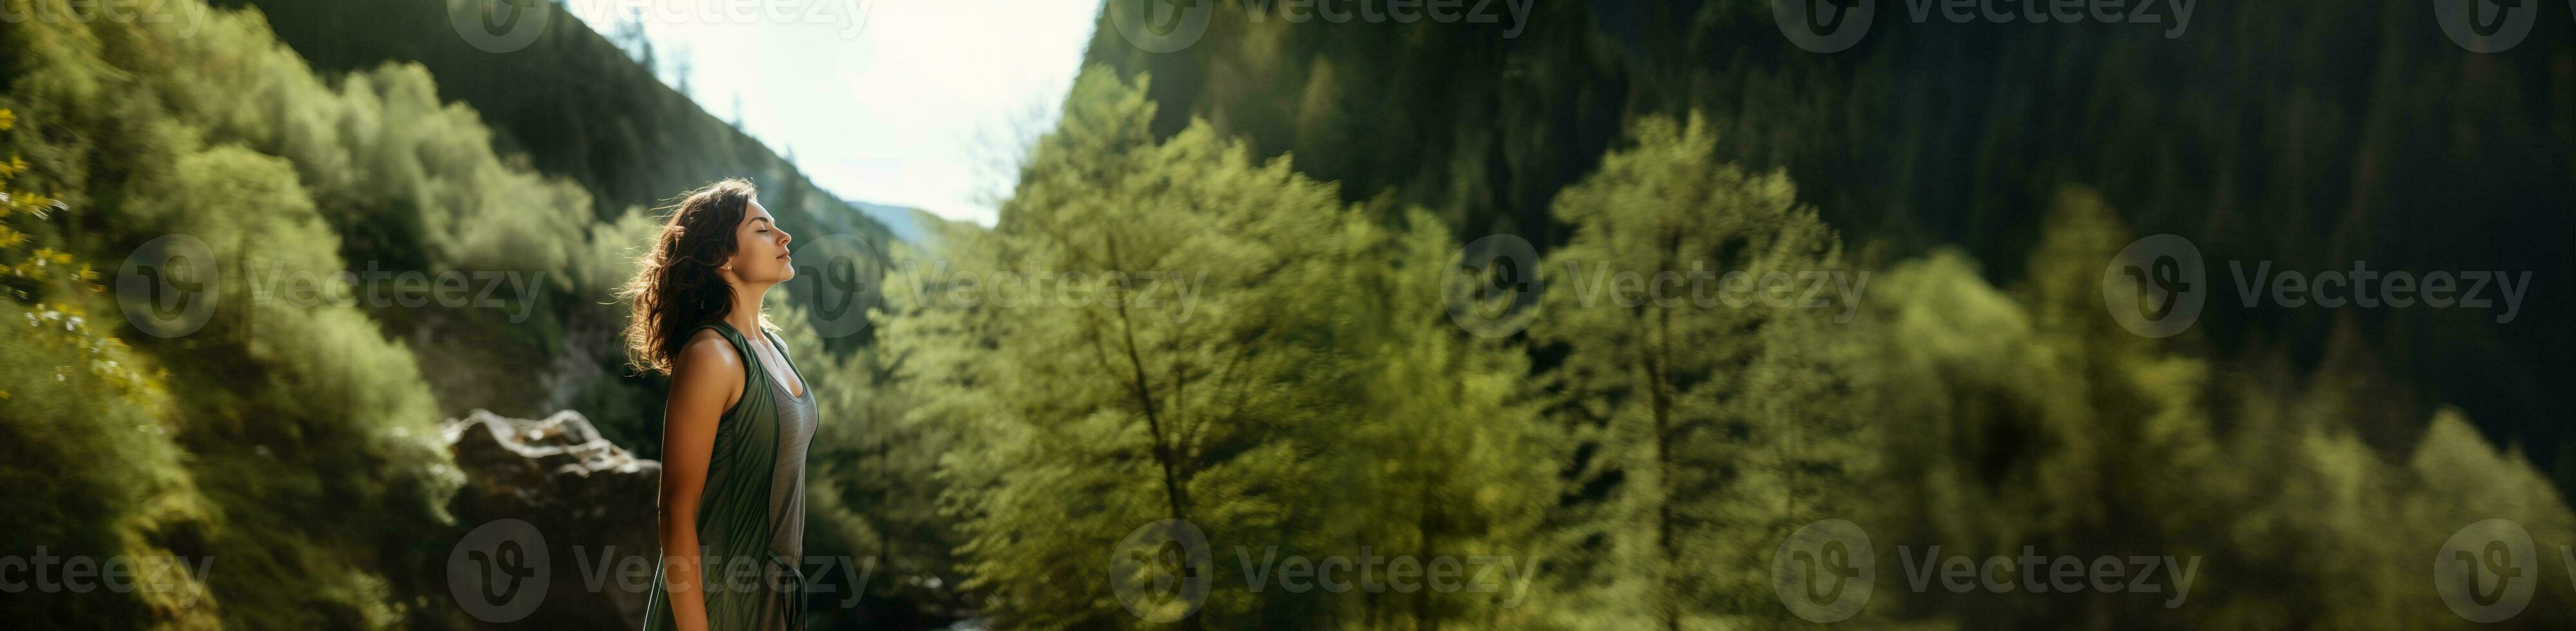 armonía, cerca a naturaleza conceptos, un joven hembra tomar profundo respiración Fresco aire en el verde bosque bosque. atractivo cuerpo y mente con naturalezaai generativo foto